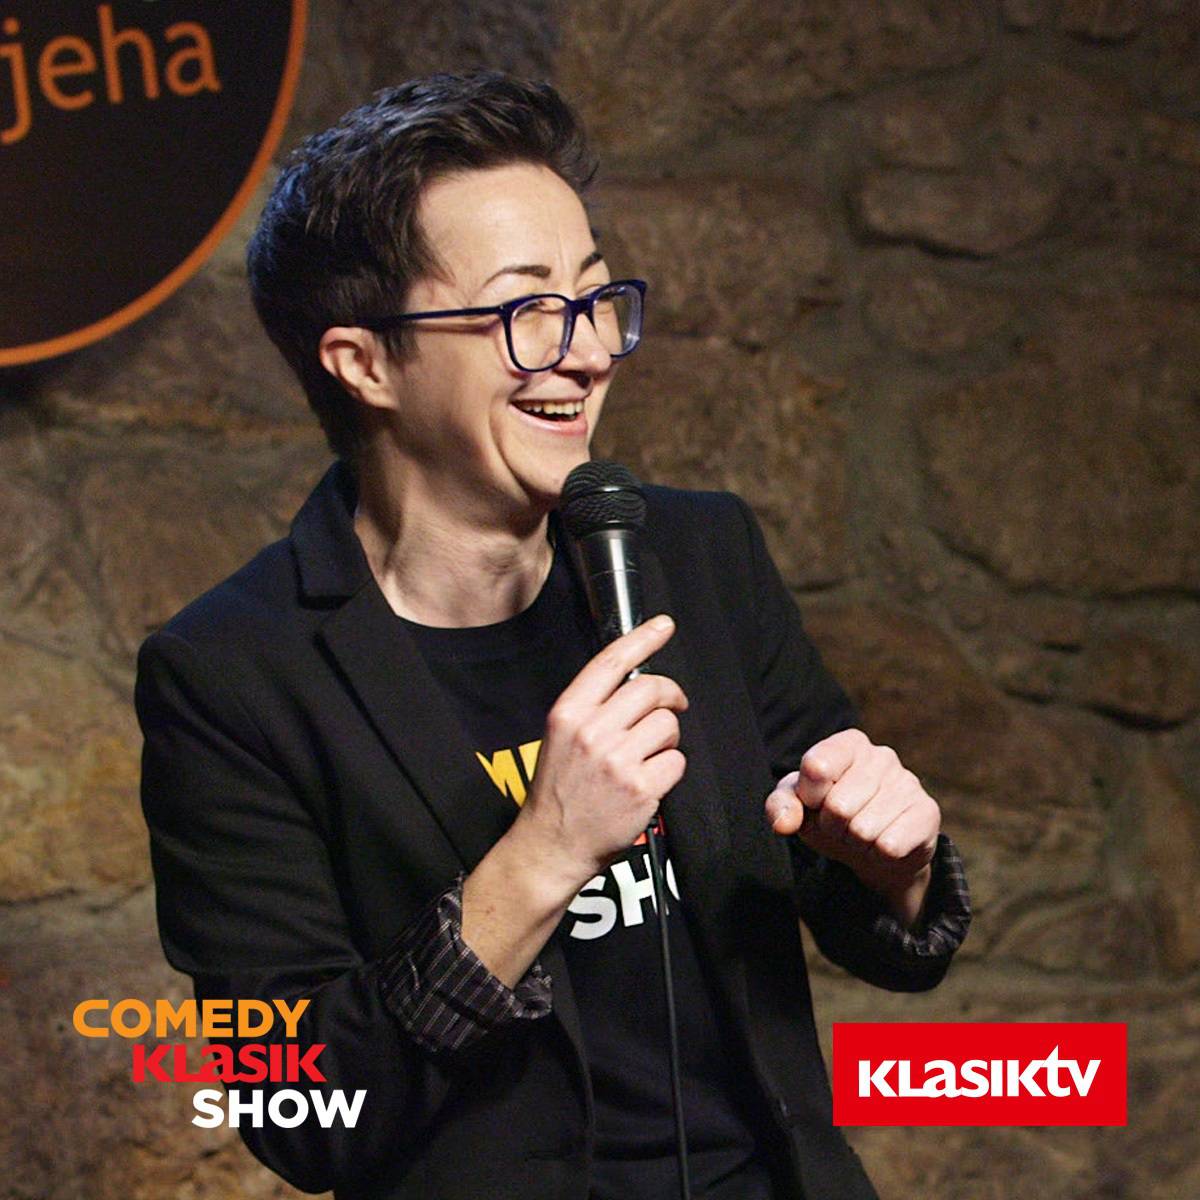 Comedy Klasik Show ide dalje: Čekaju vas nove doze smijeha